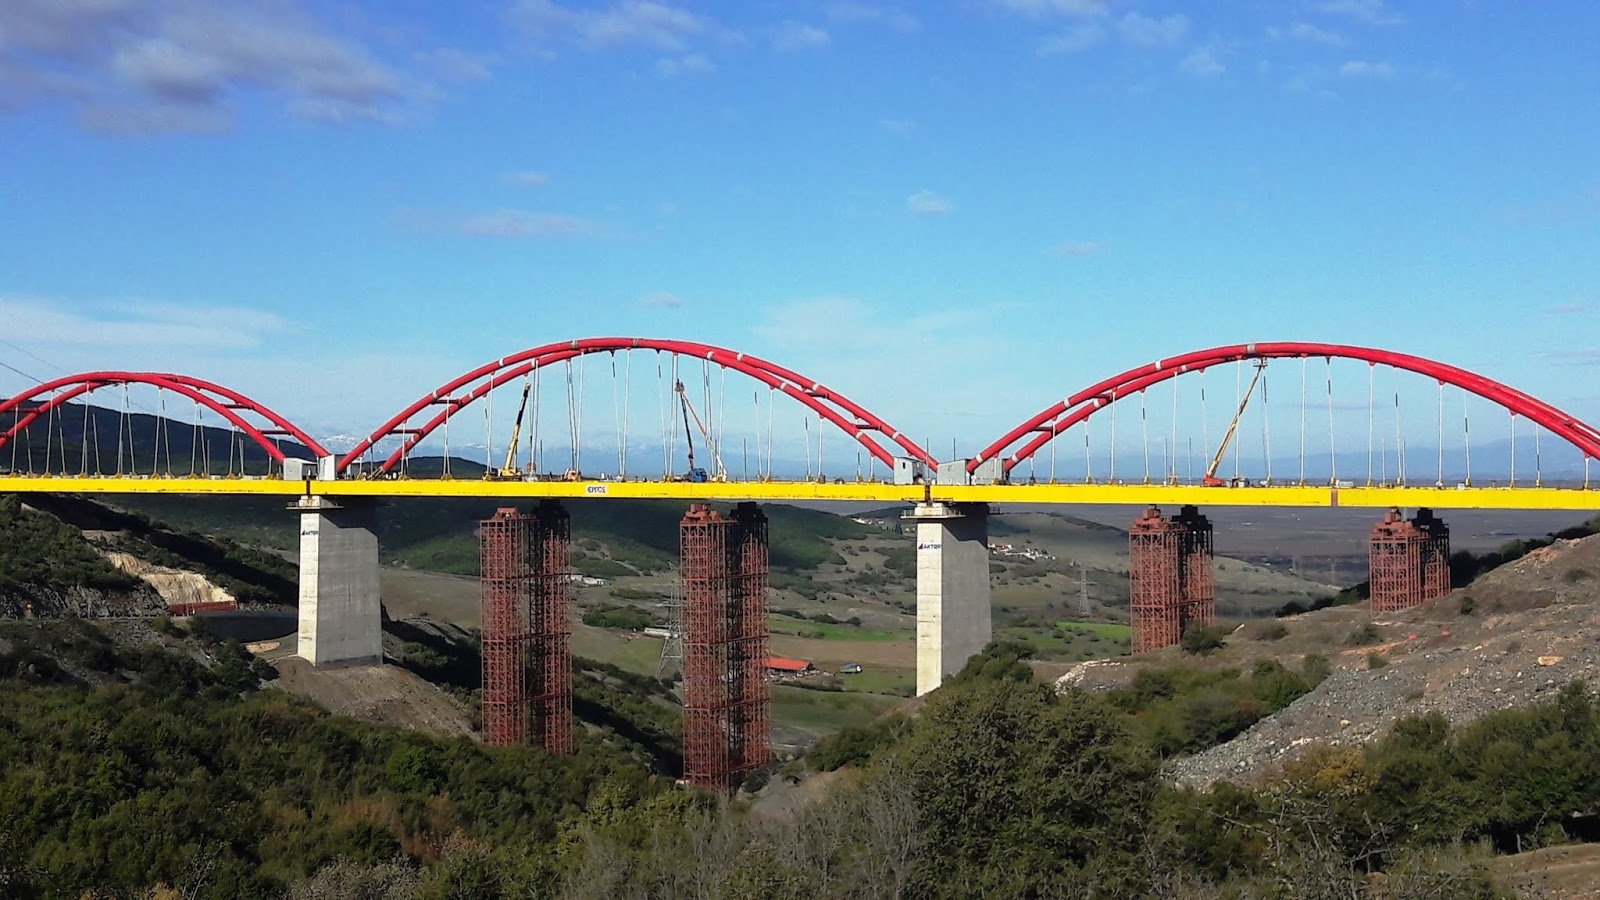 More information about "Οι δοκιμές φόρτισης για την παράδοση της Σιδηροδρομικής Γέφυρας Εκκάρας ΣΓ26"